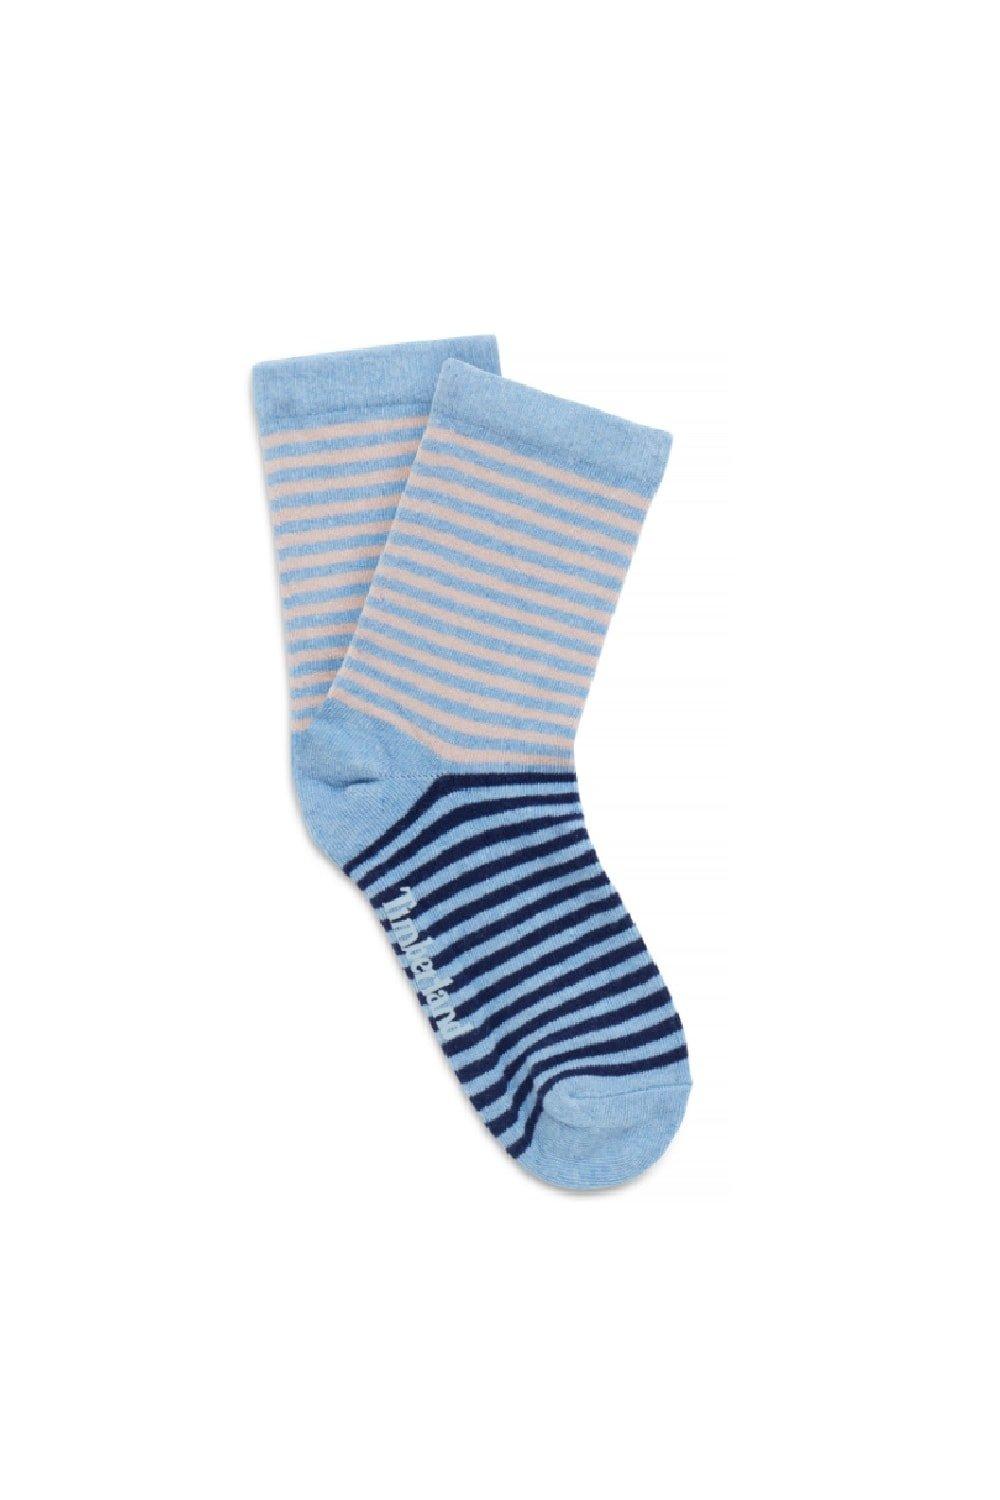 Striped Ankle Socks (2 Pairs)